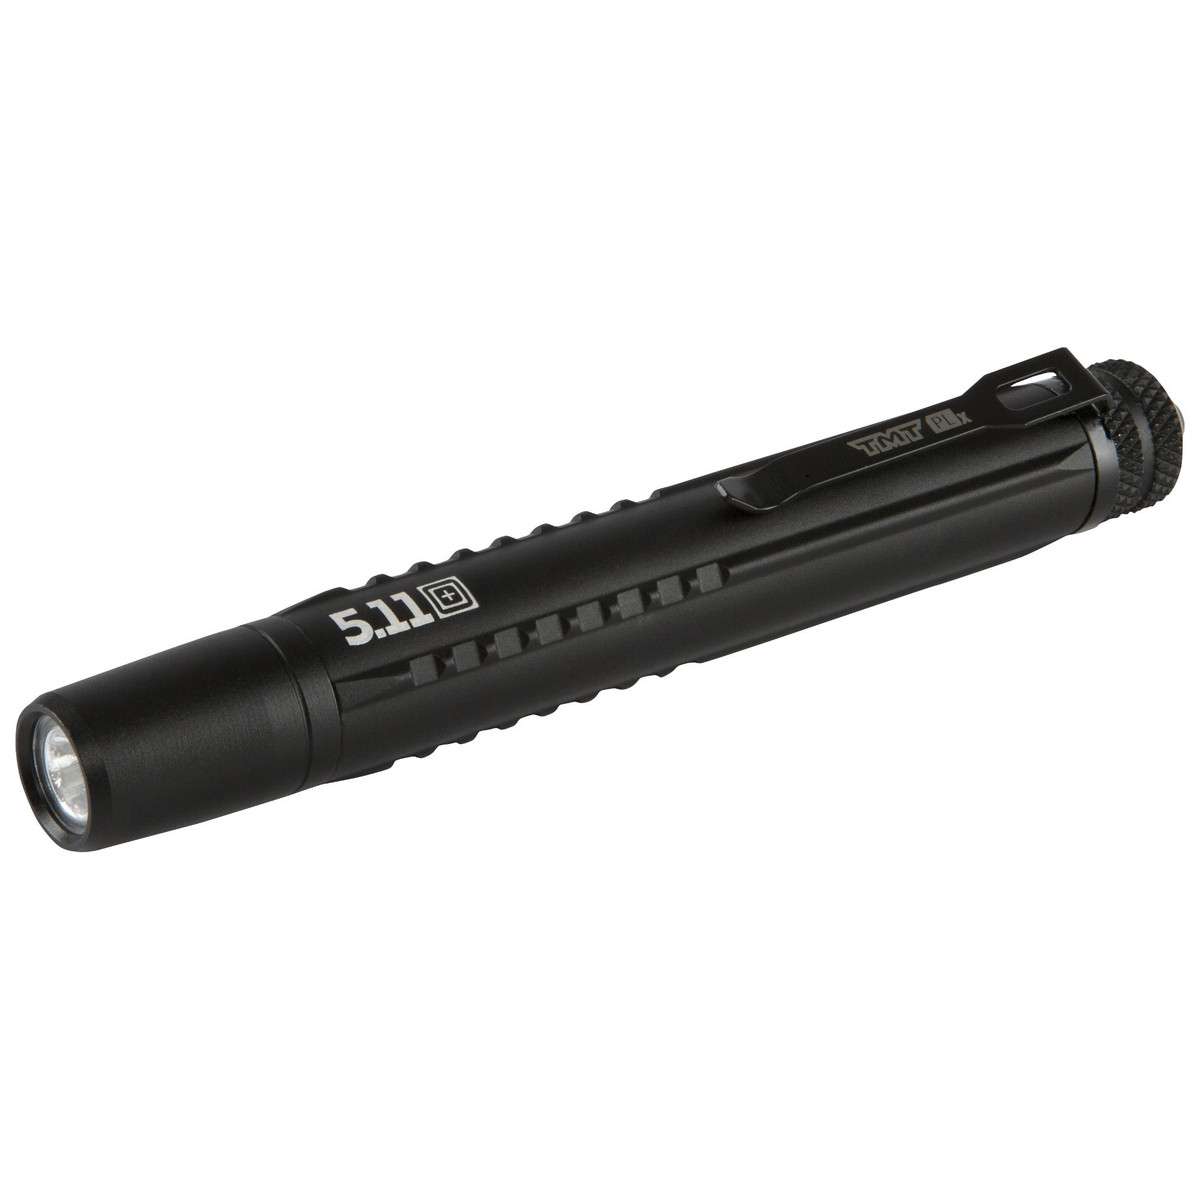 5.11 Tactical TMT PLx CREE XPE-B LED Water Resistant Pen Flashlight 53028 